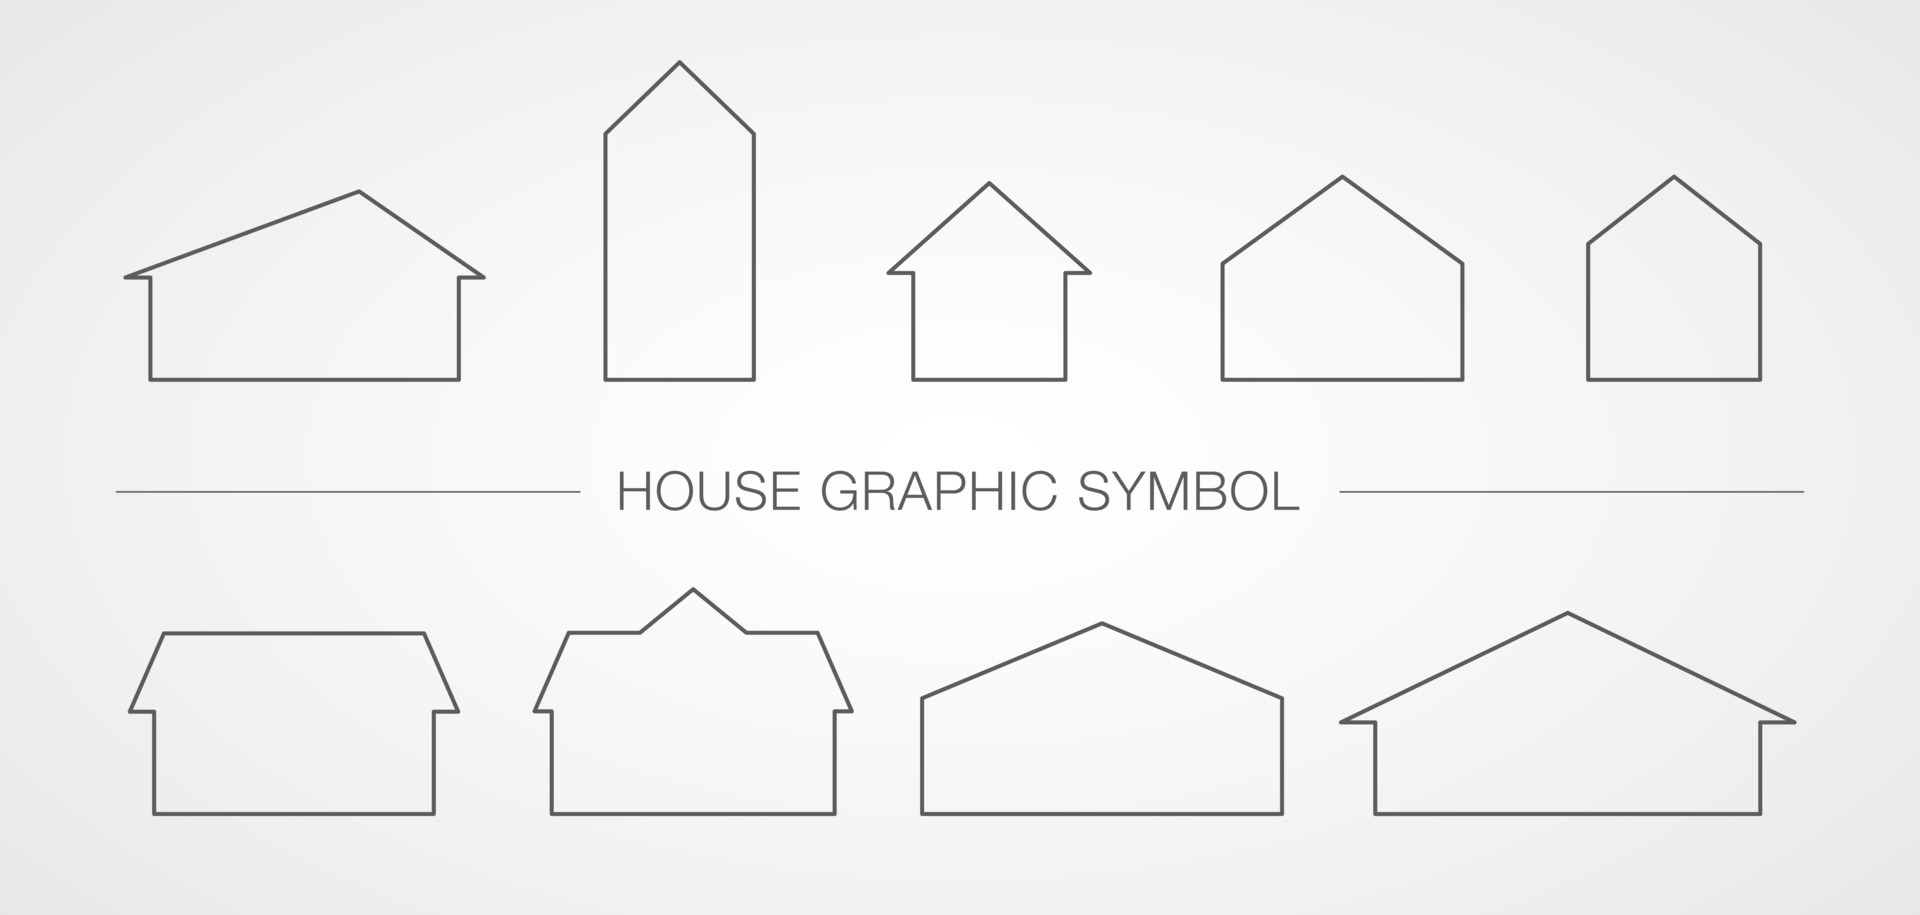 https://static.vecteezy.com/system/resources/previews/007/652/274/original/simple-house-shape-symbol-graphic-element-set-vector.jpg